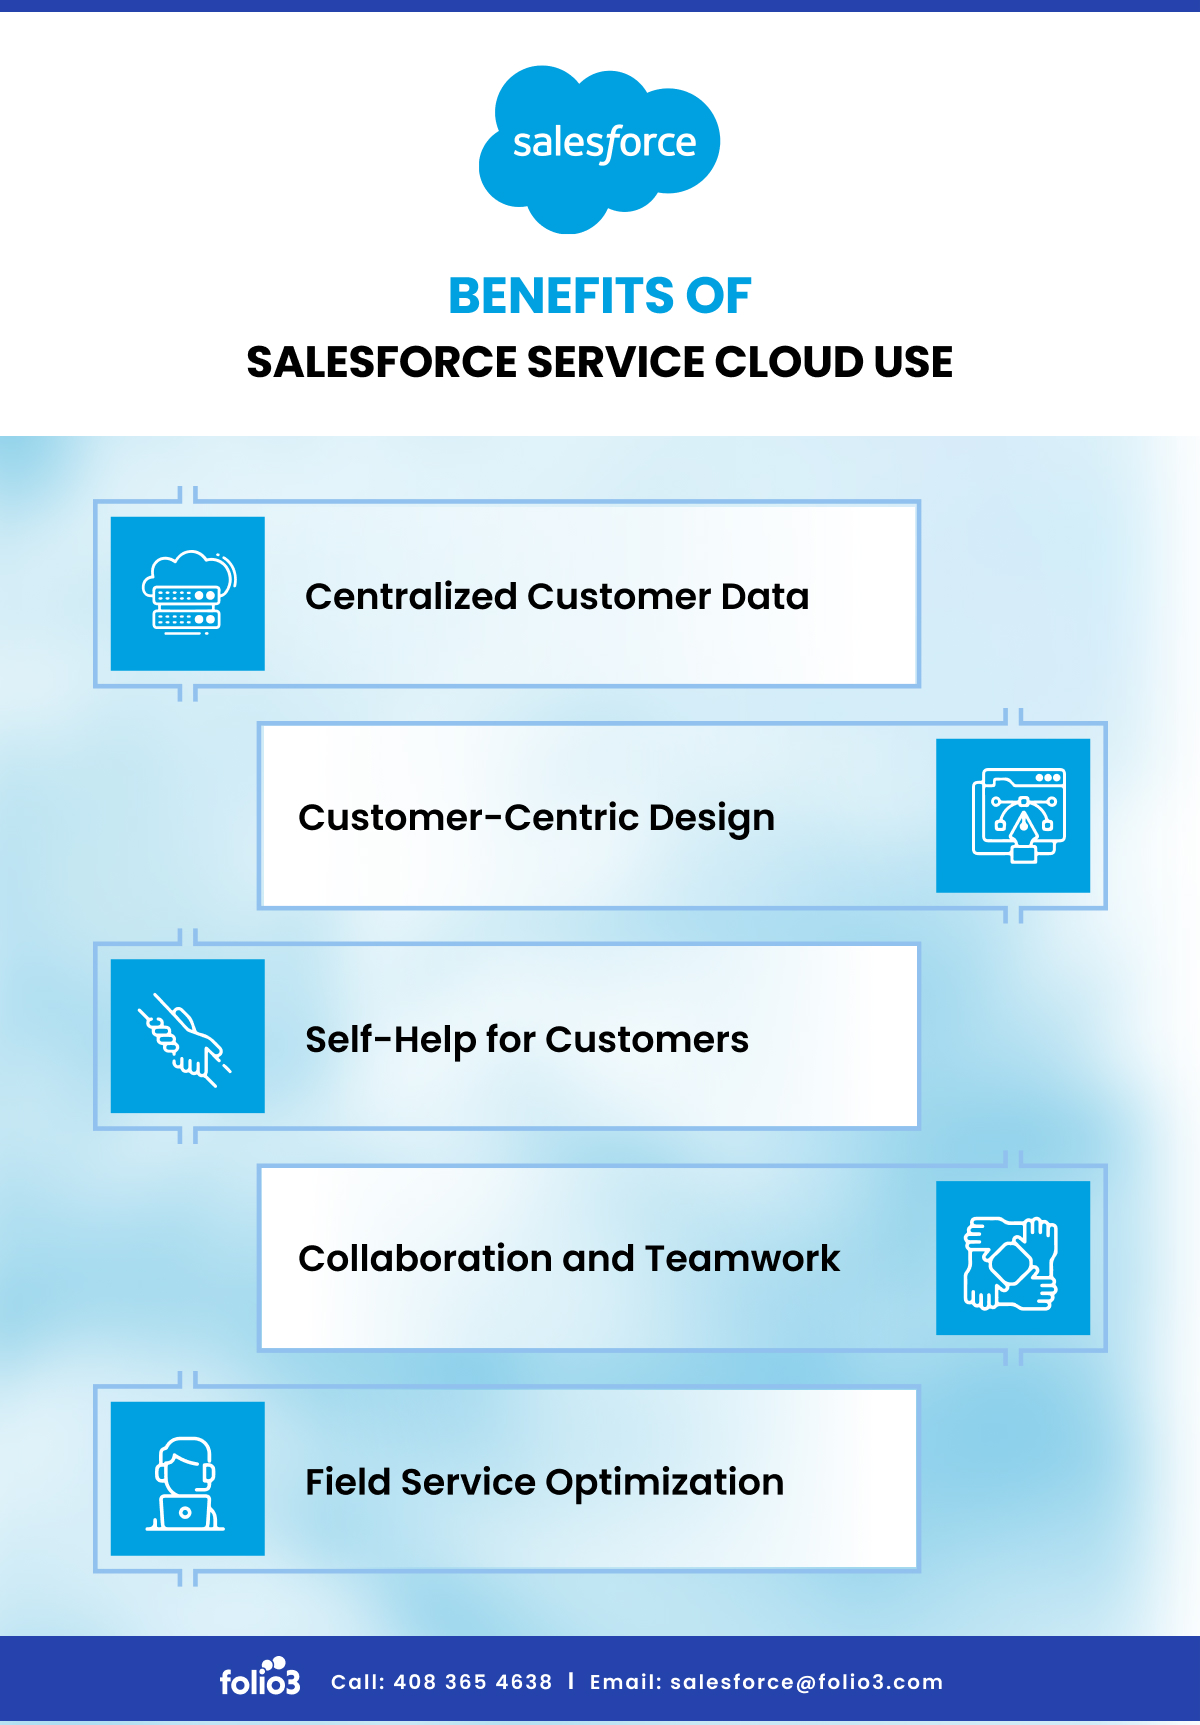 Benefits of Salesforce Service Cloud Use